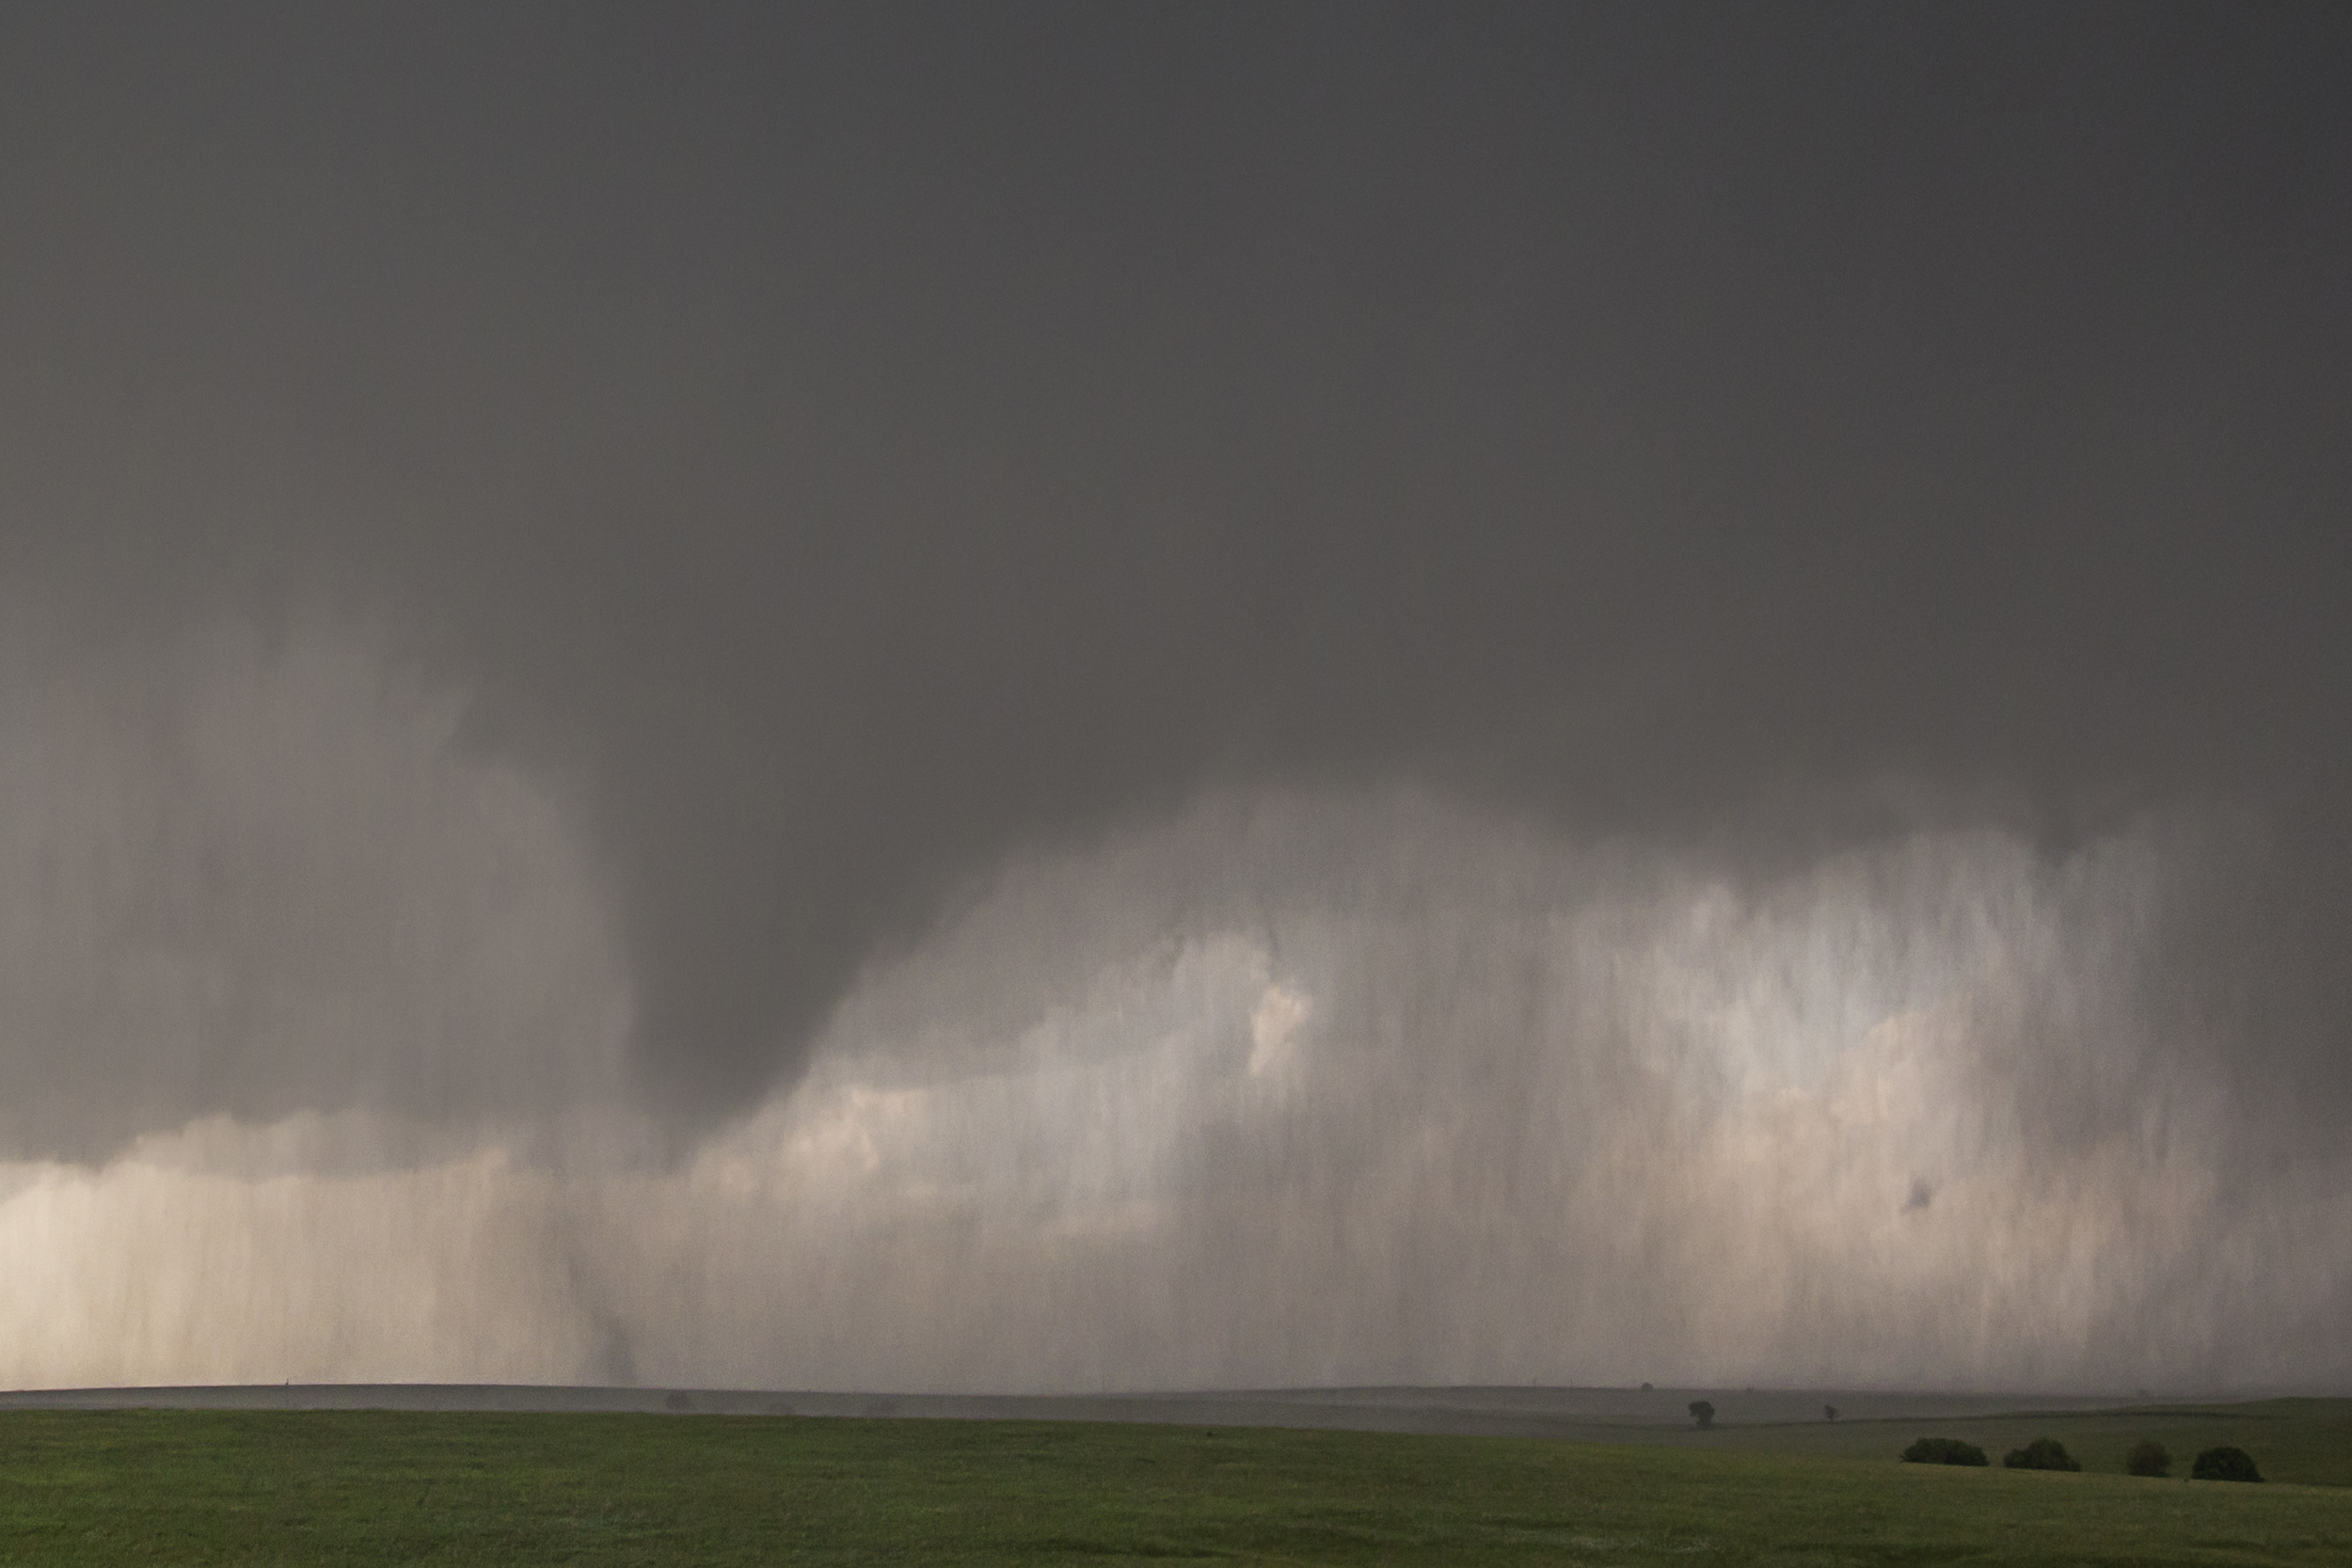  Tornado touches down in a field near Bennington, Kansas&nbsp; 